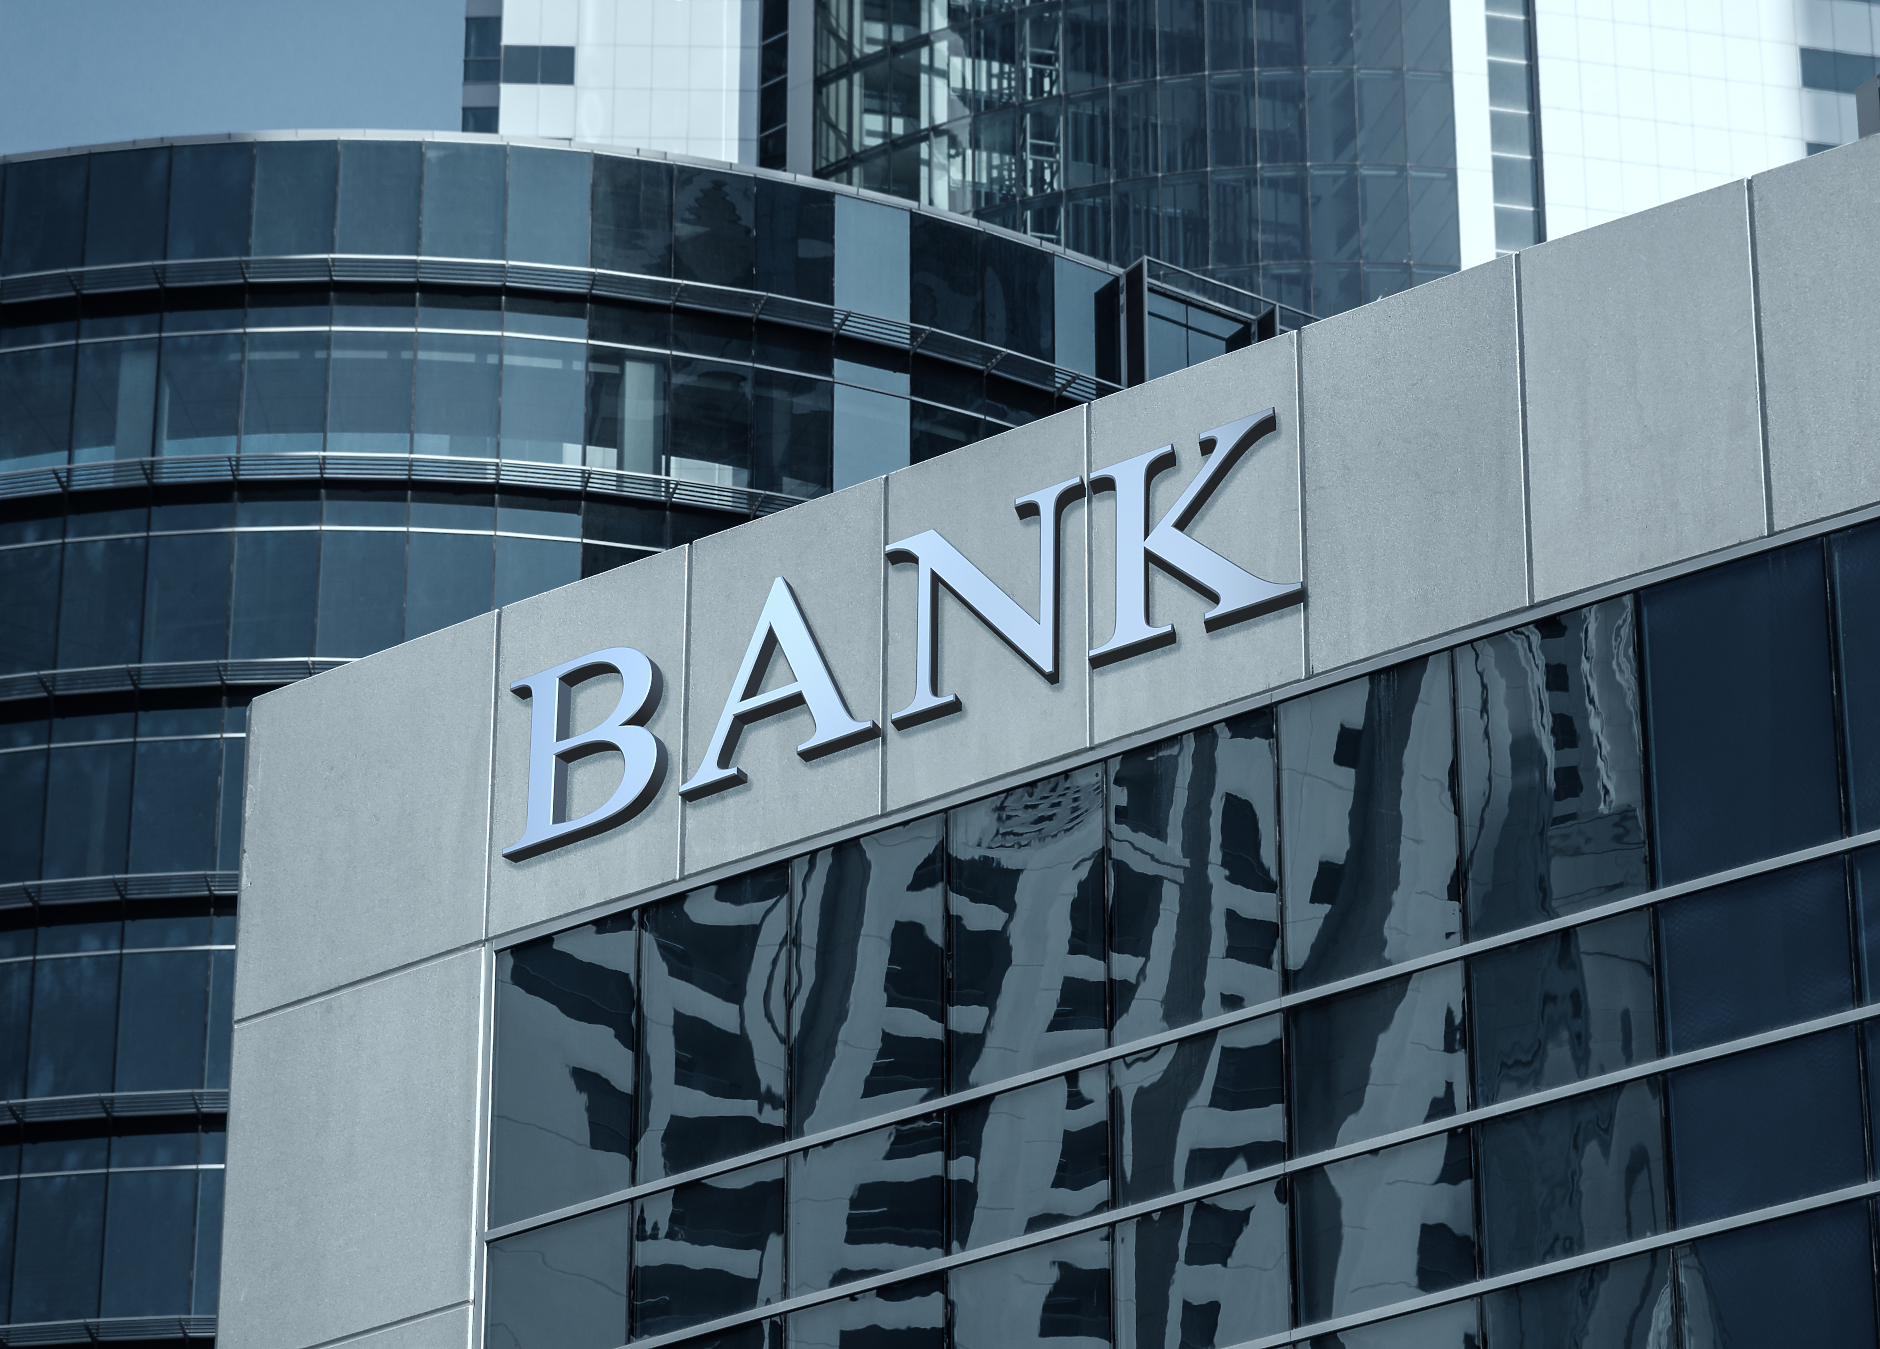 Глобалните регулатори затягат правилата за аутсорсинг на банкови услуги